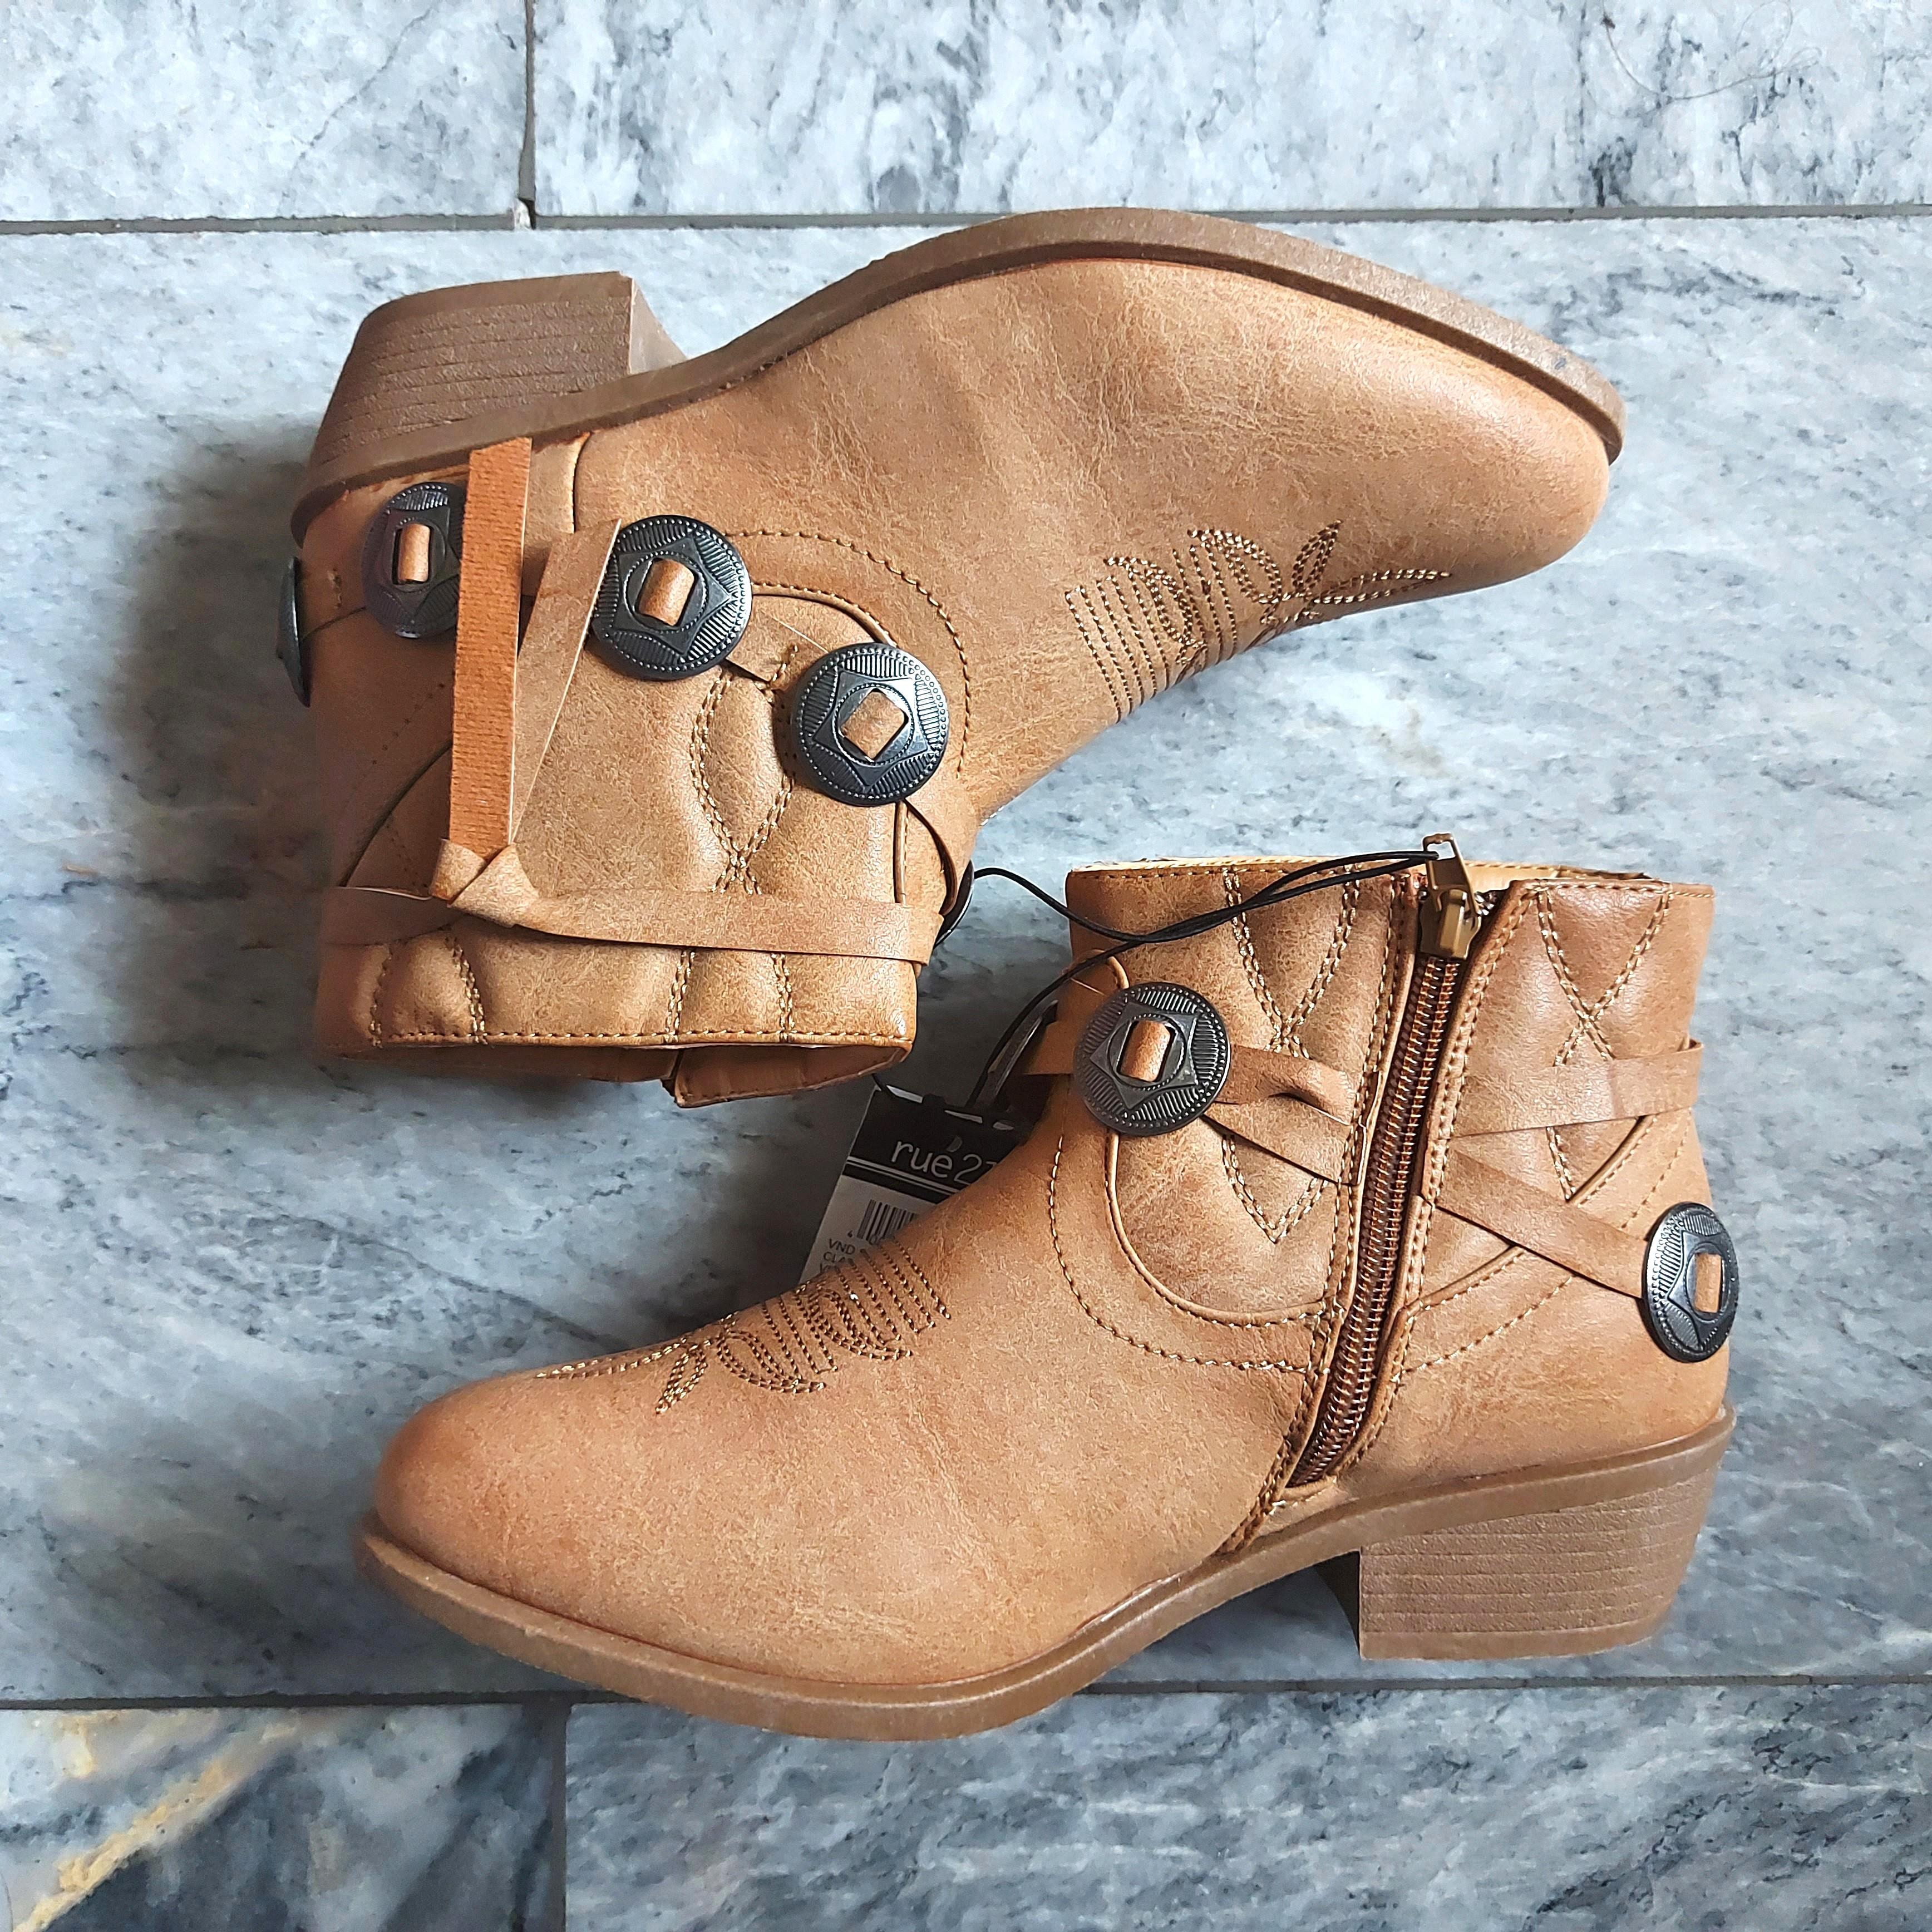 SALE!] RUE 21: Brown Boots, Women's 